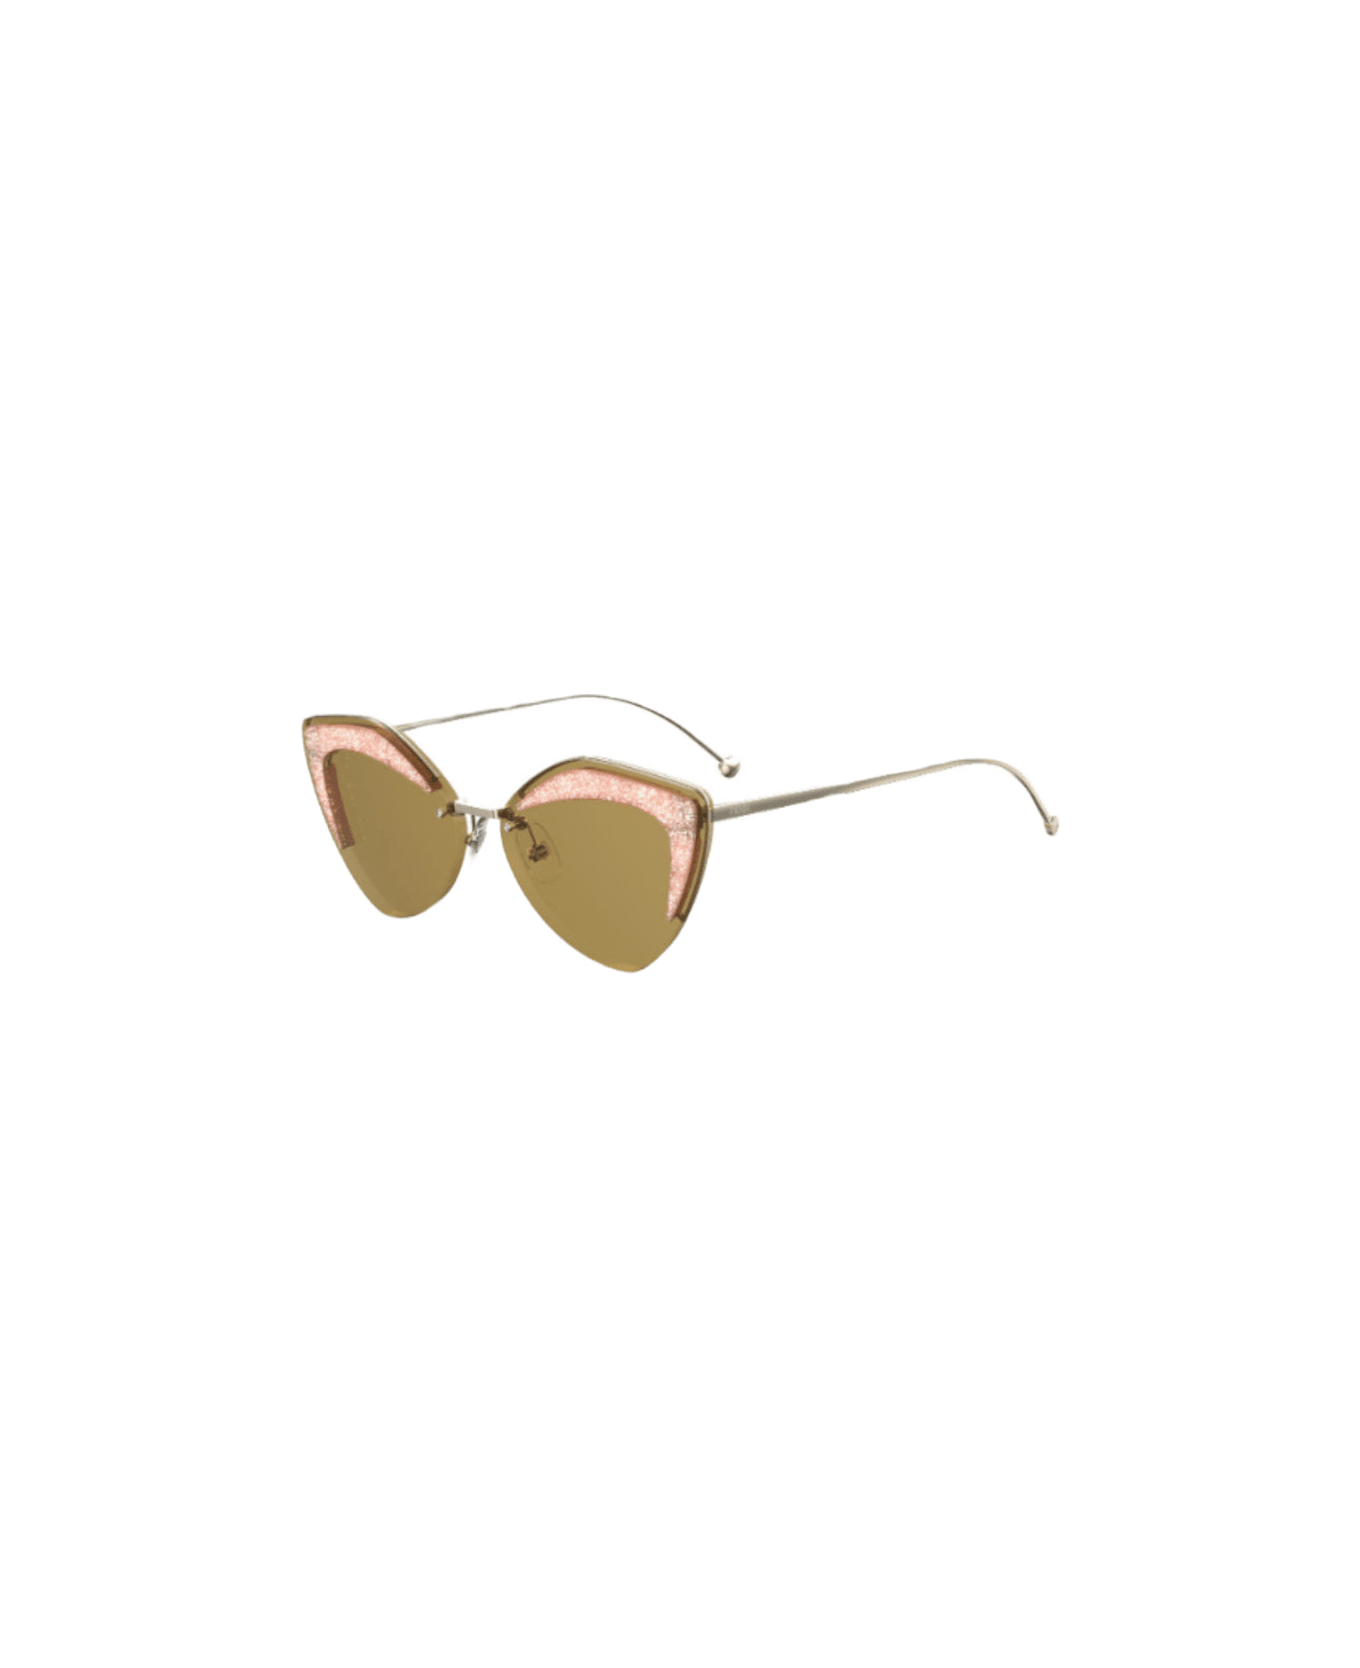 Fendi Eyewear Ff 0355 - Gold Sunglasses サングラス